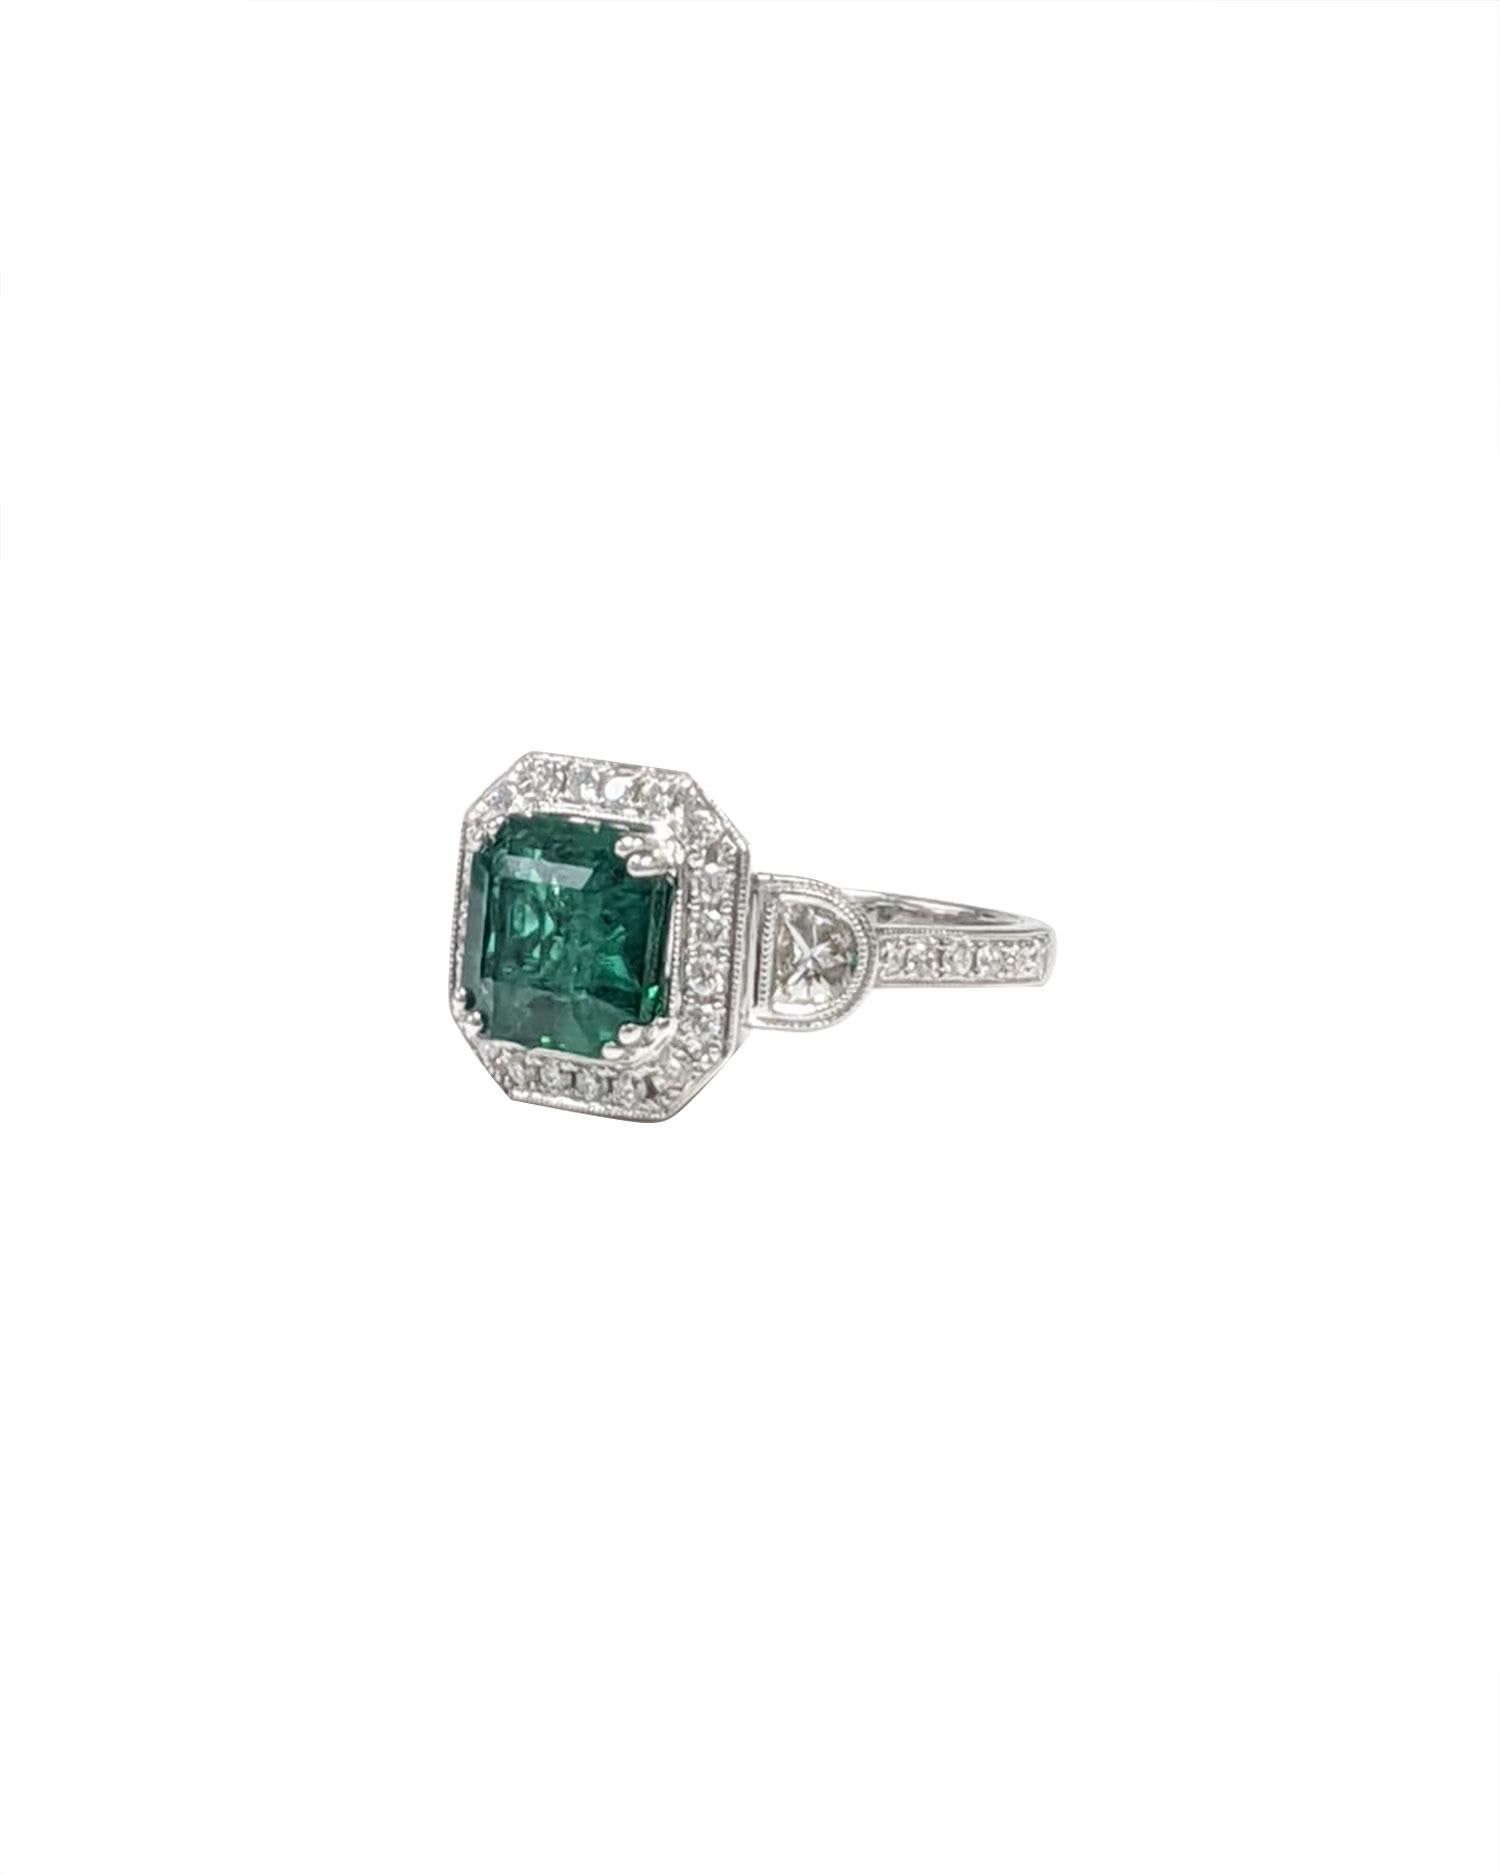 3-Stone Emerald Cut Emerald and  White Diamond Ring For Sale 2